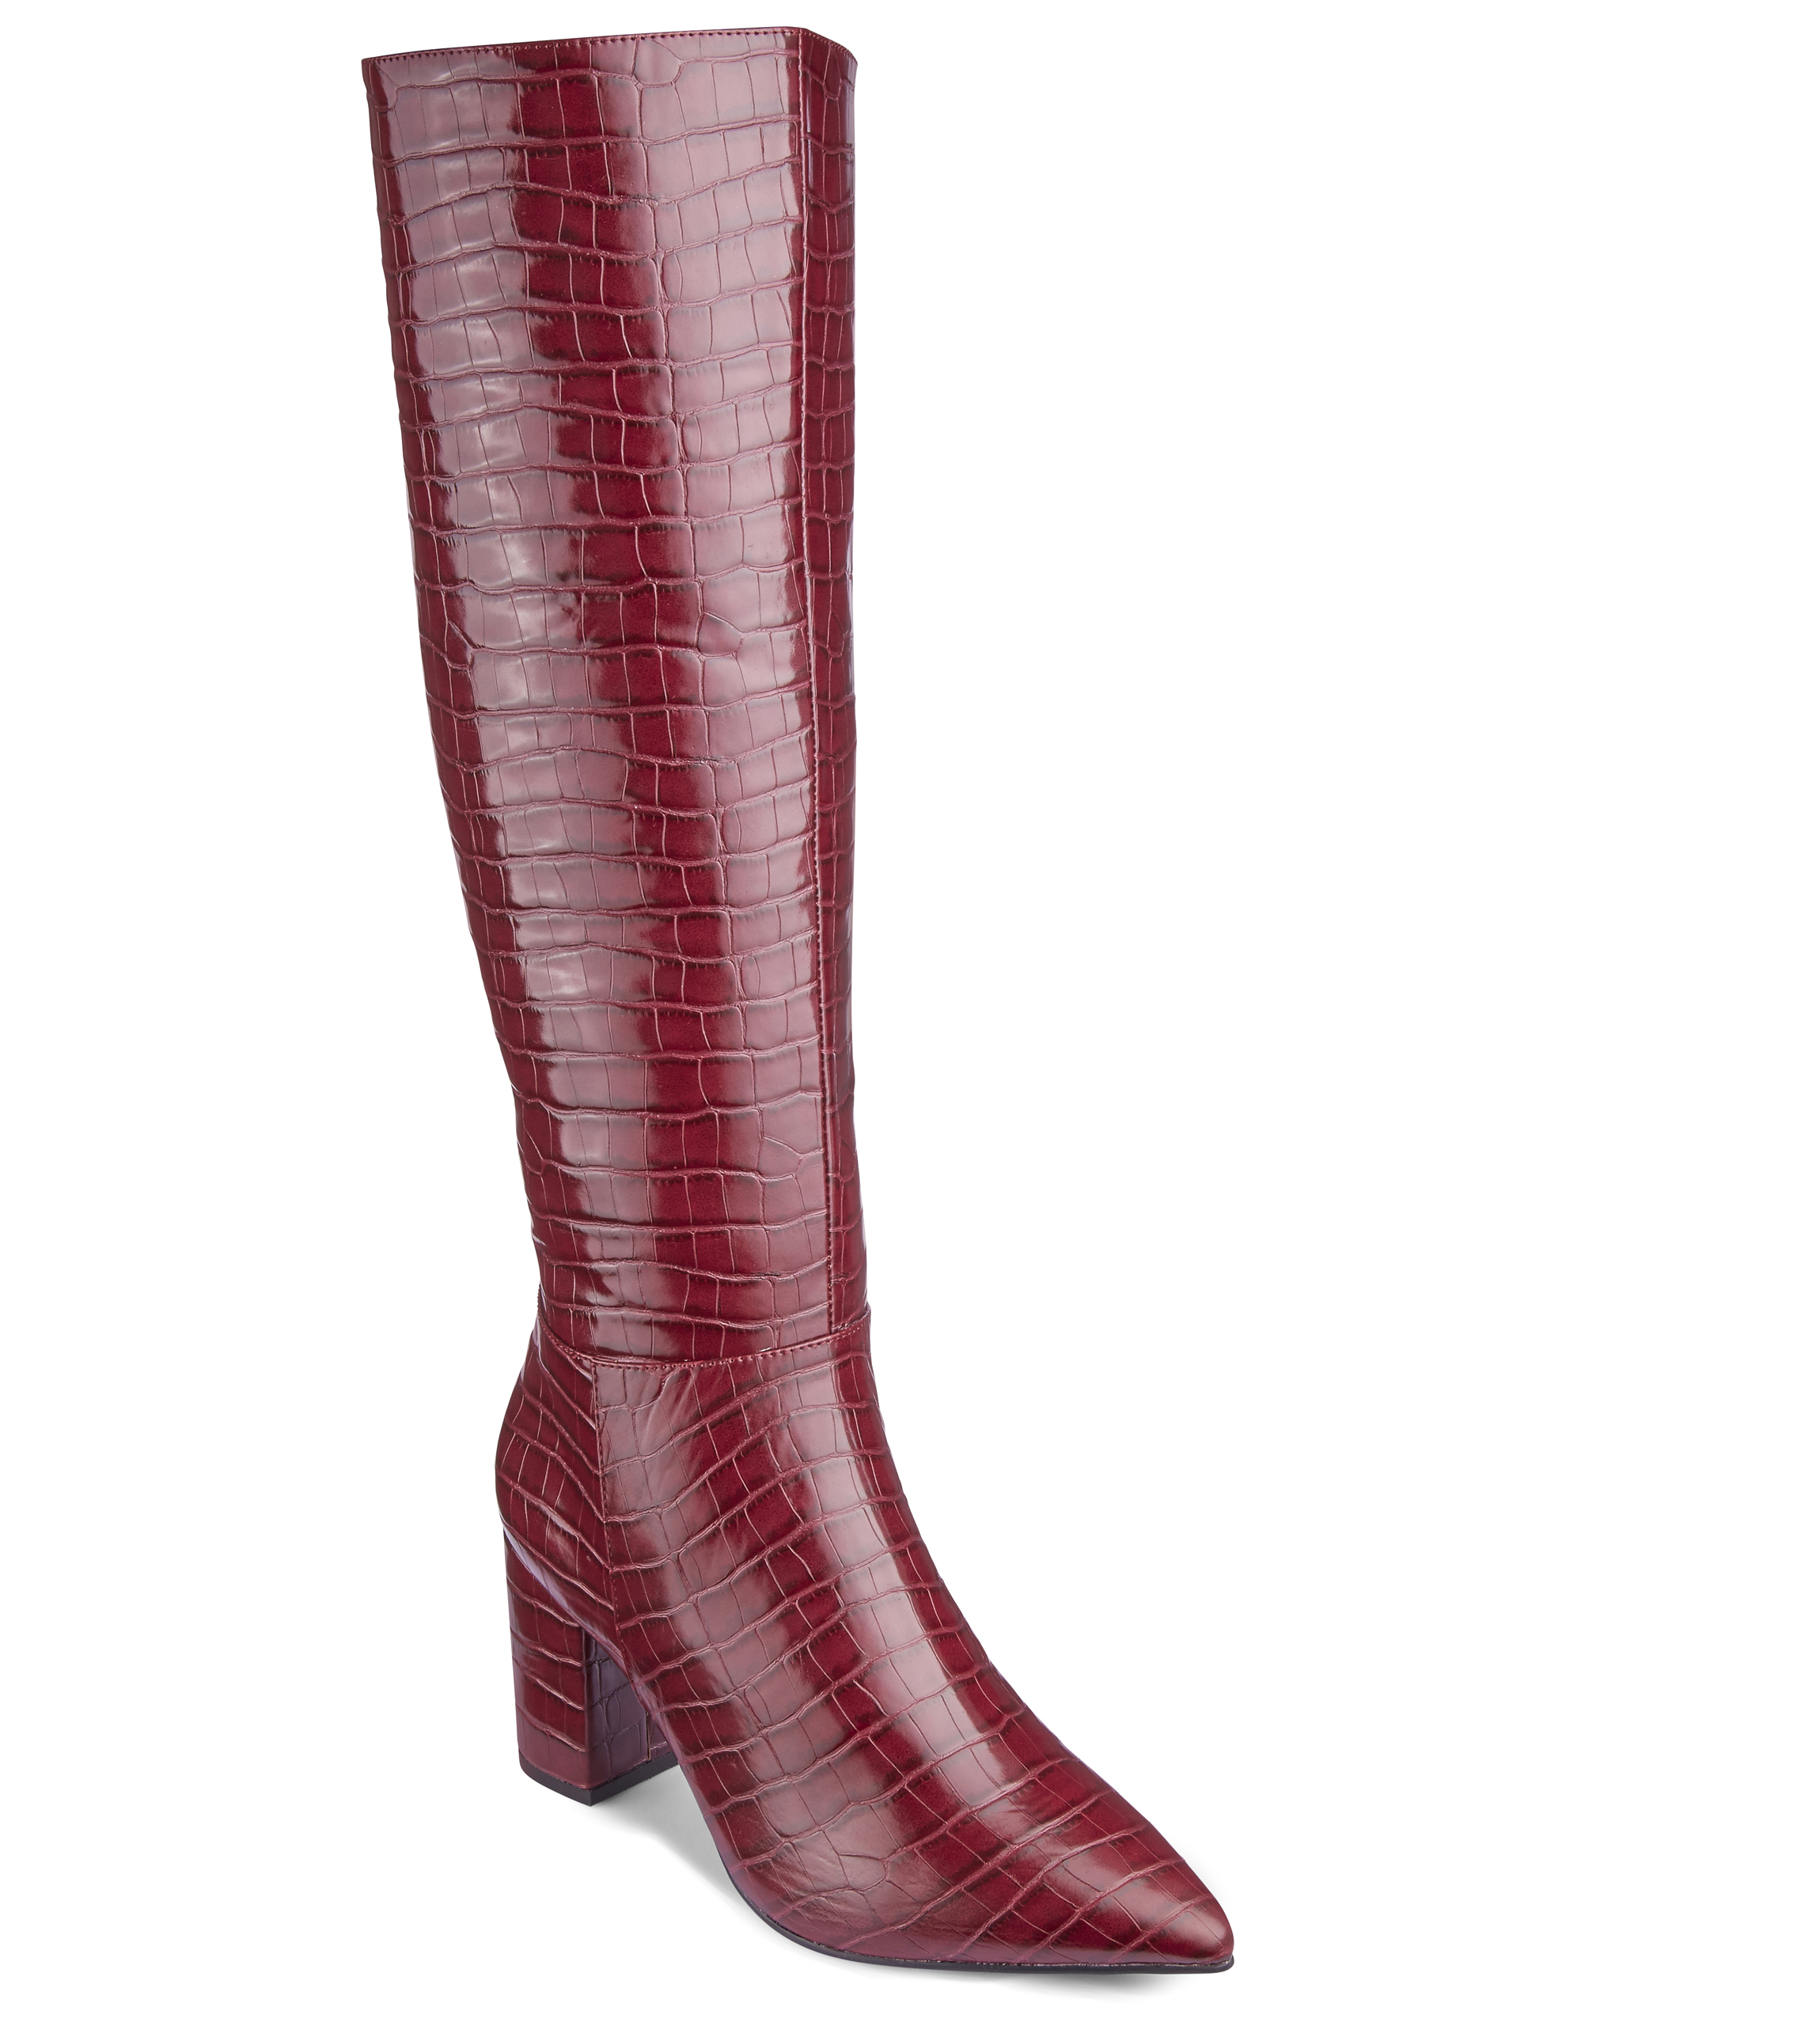 JD Williams Bordeaux High Leg Croc Boots, £59/AED266.31